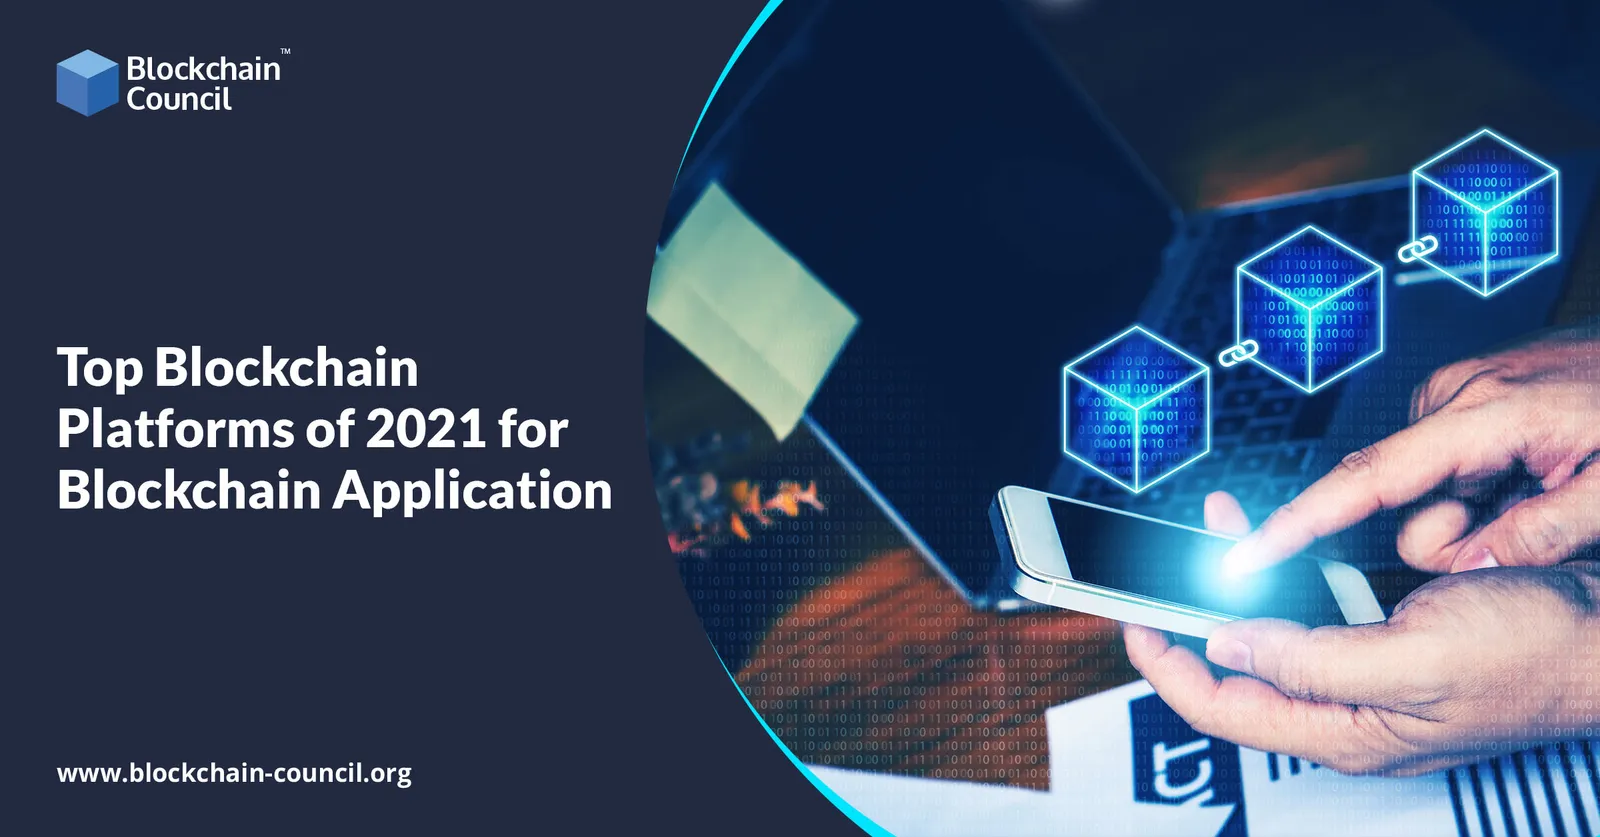 Top Blockchain Platforms for Blockchain Applications in 2021